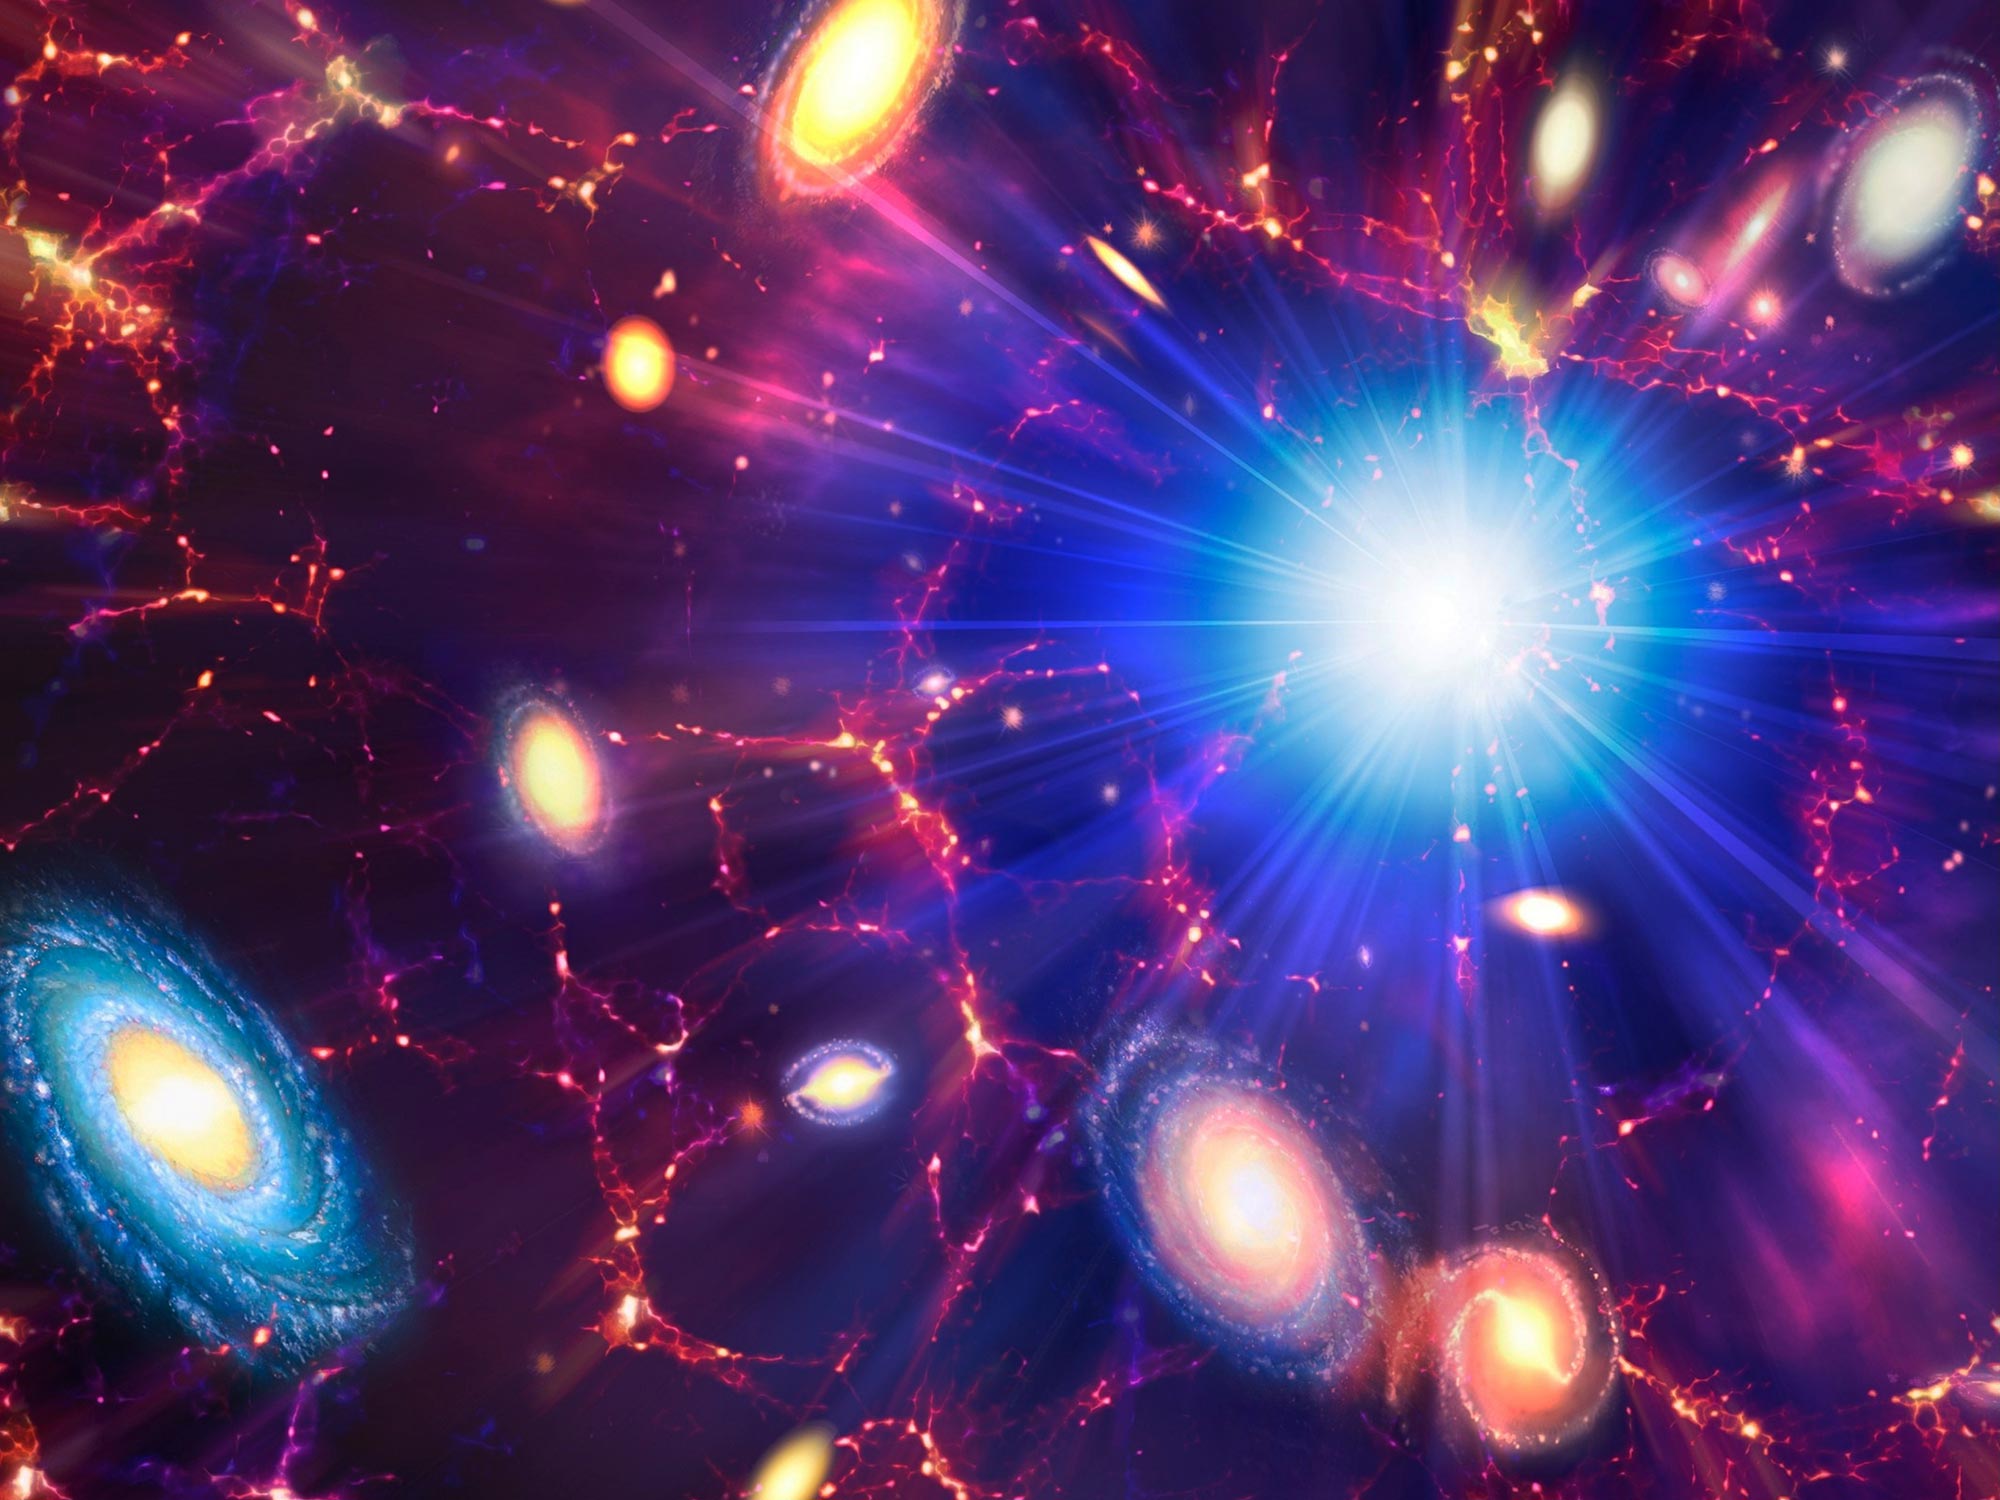 Big-Bang-Expanding-Universe-Concept.jpg